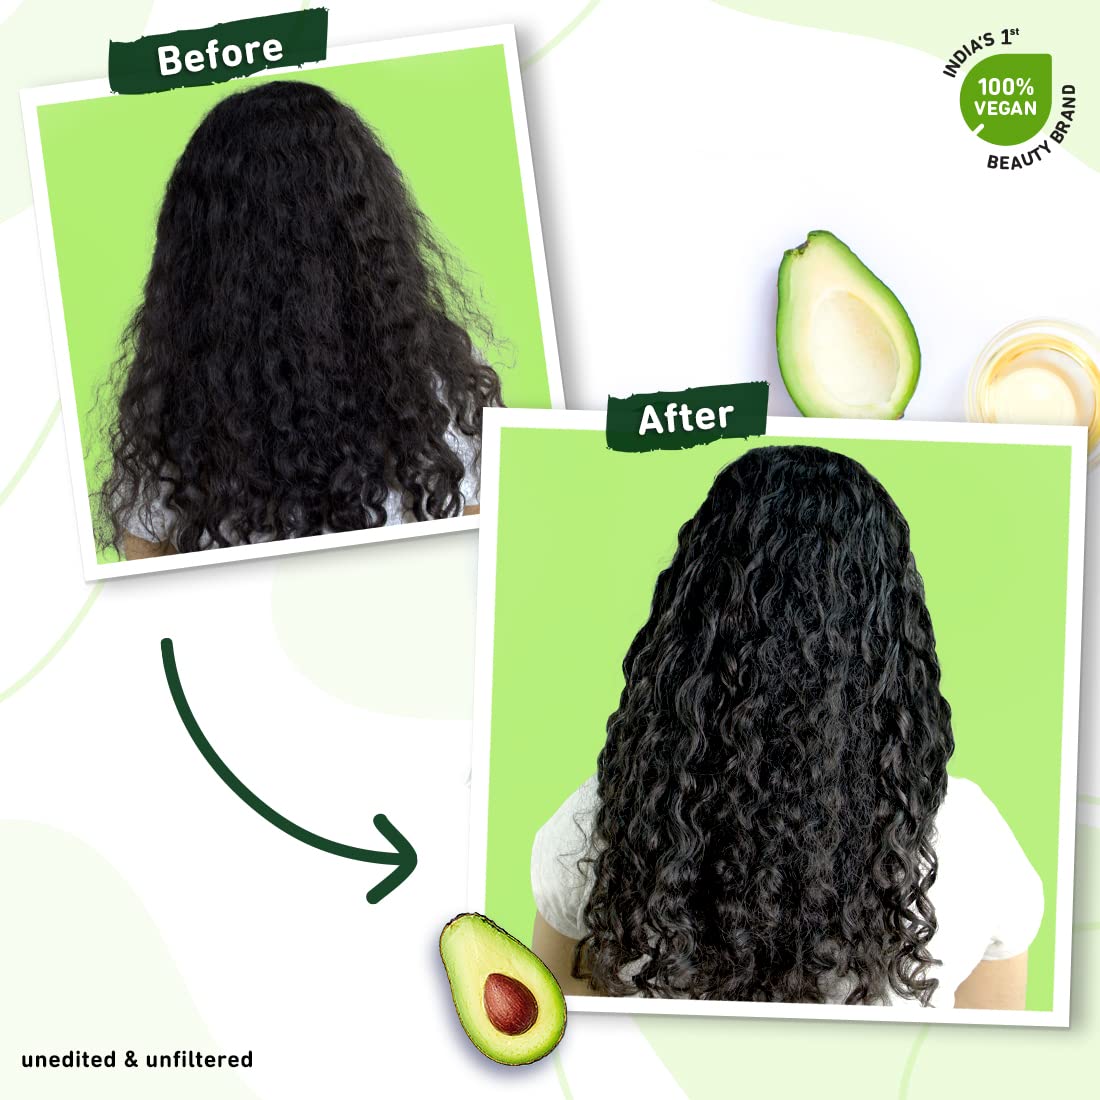 Plum Avocado & Argan Oil Curl Gel for Curly Hair I Curly Hair Product Women & men | Defines Curls, smoothens curls & Hydrates I 110ml